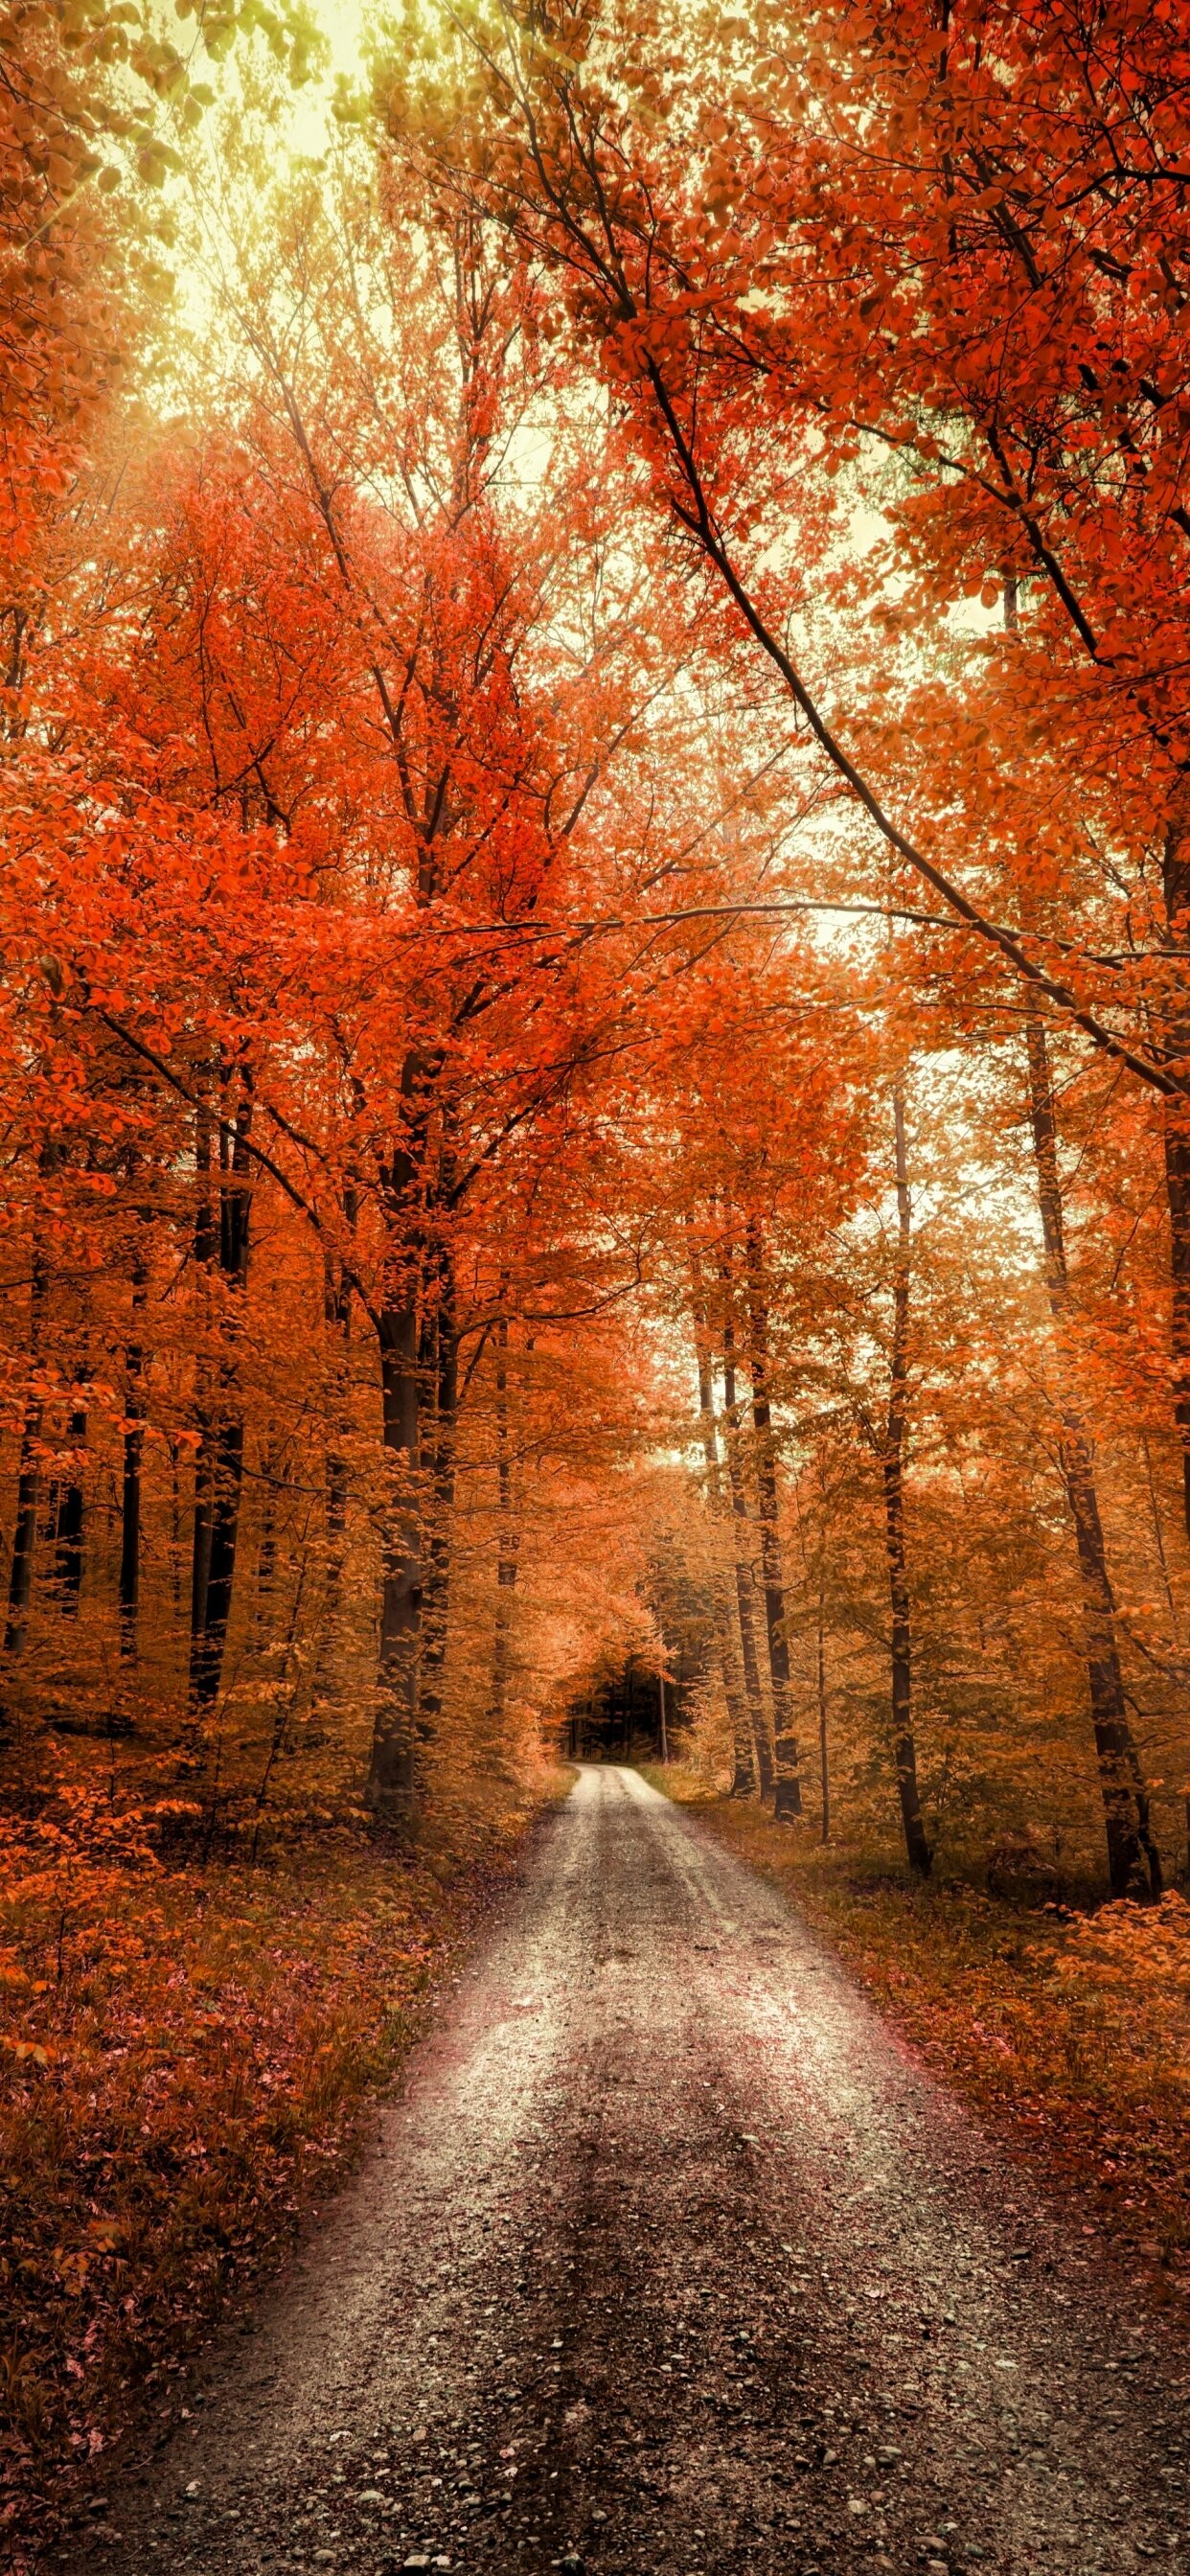 Autumn: A third season of the year, Brown rusty foliage. 1250x2690 HD Wallpaper.